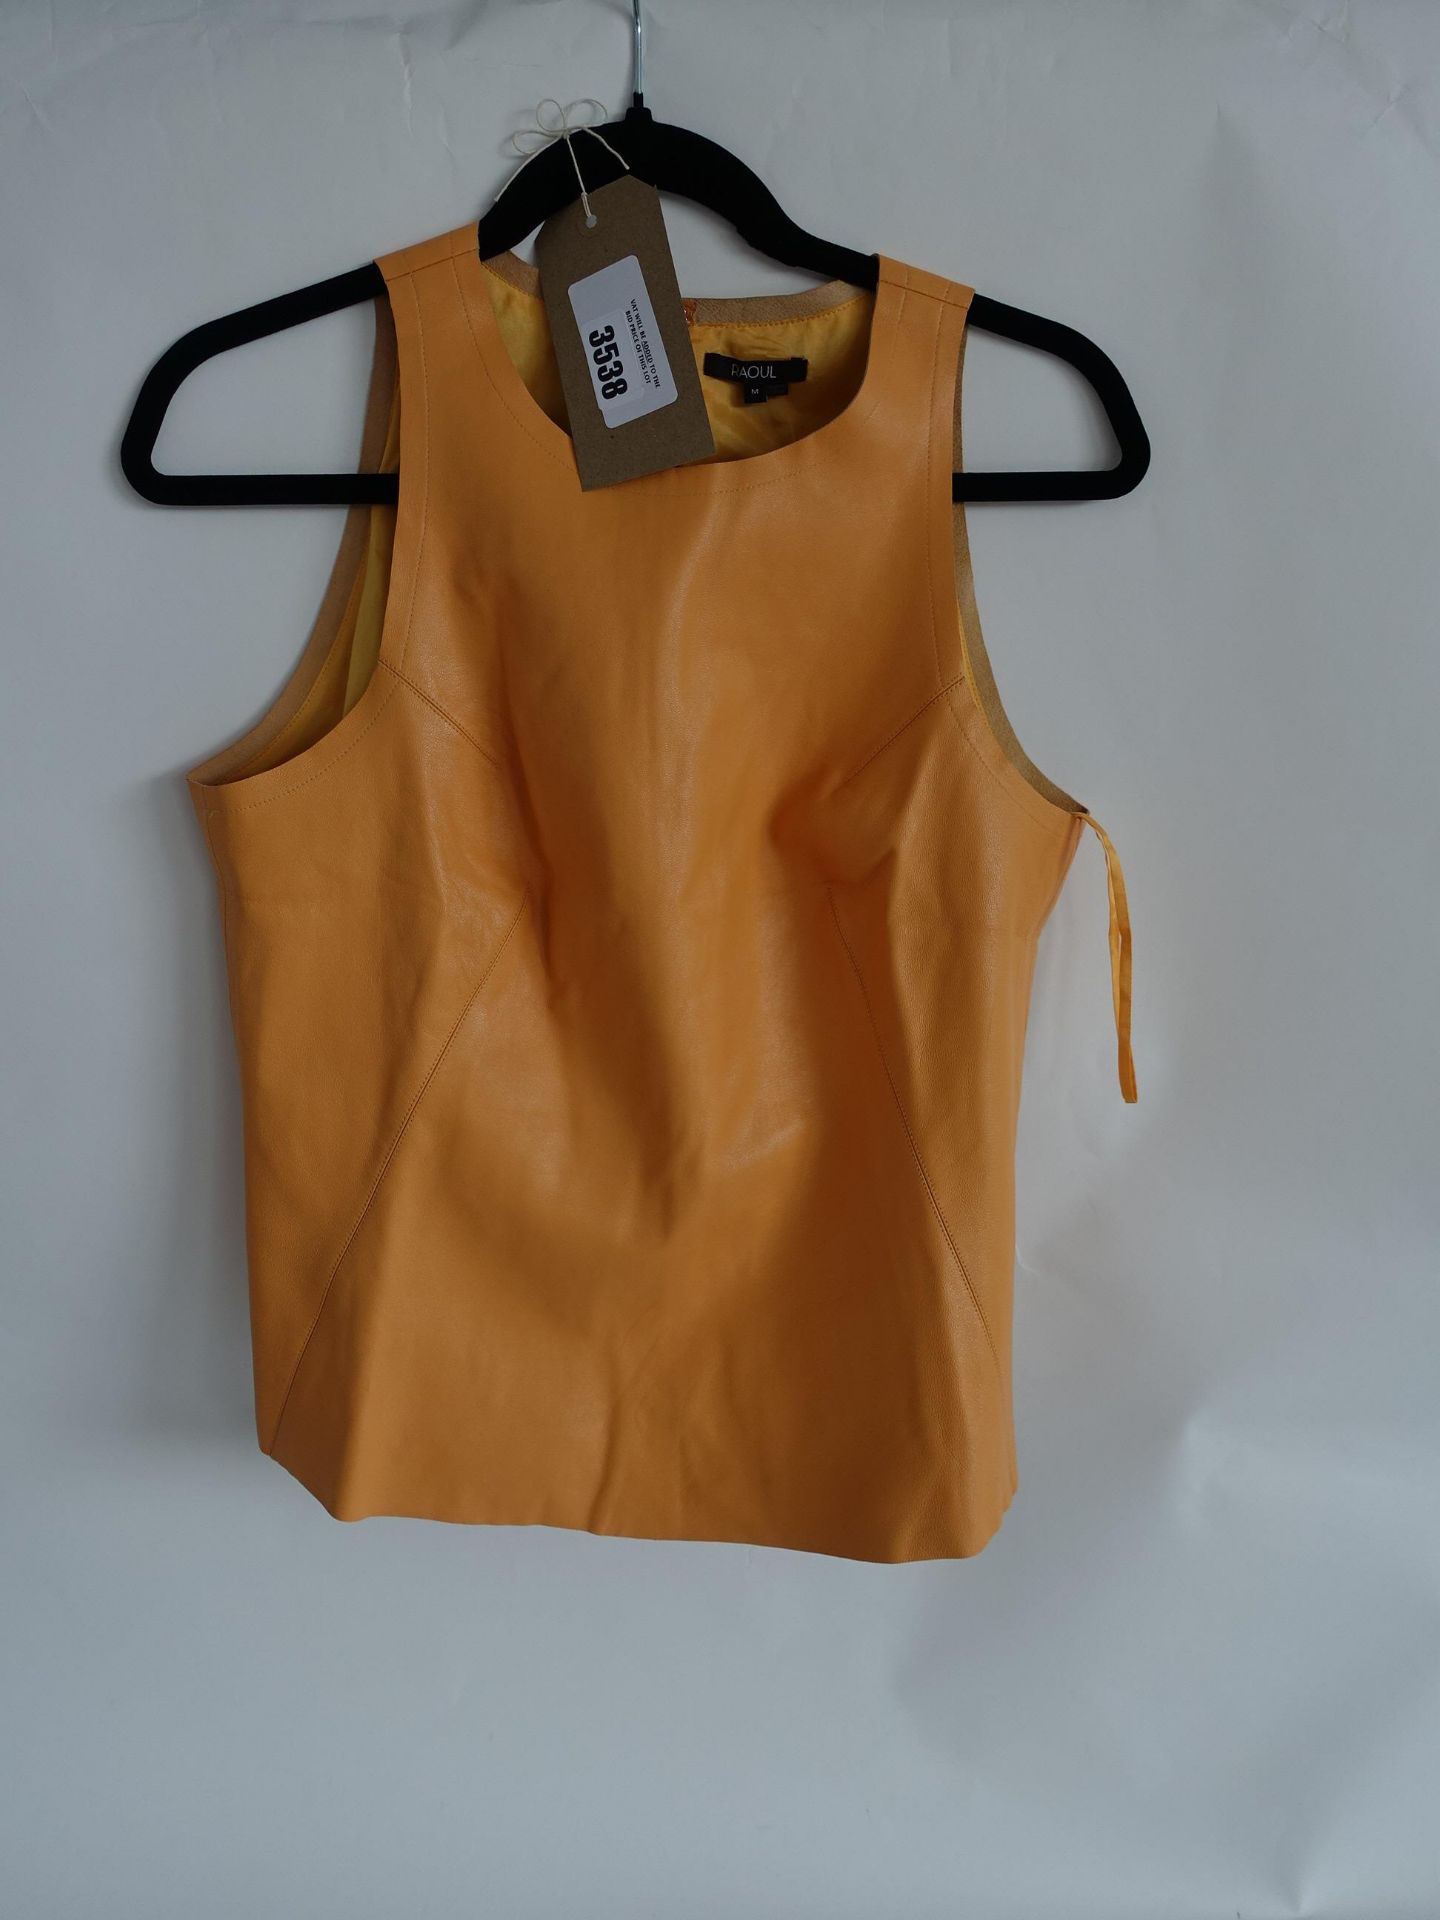 Raoul orange leather vest size medium